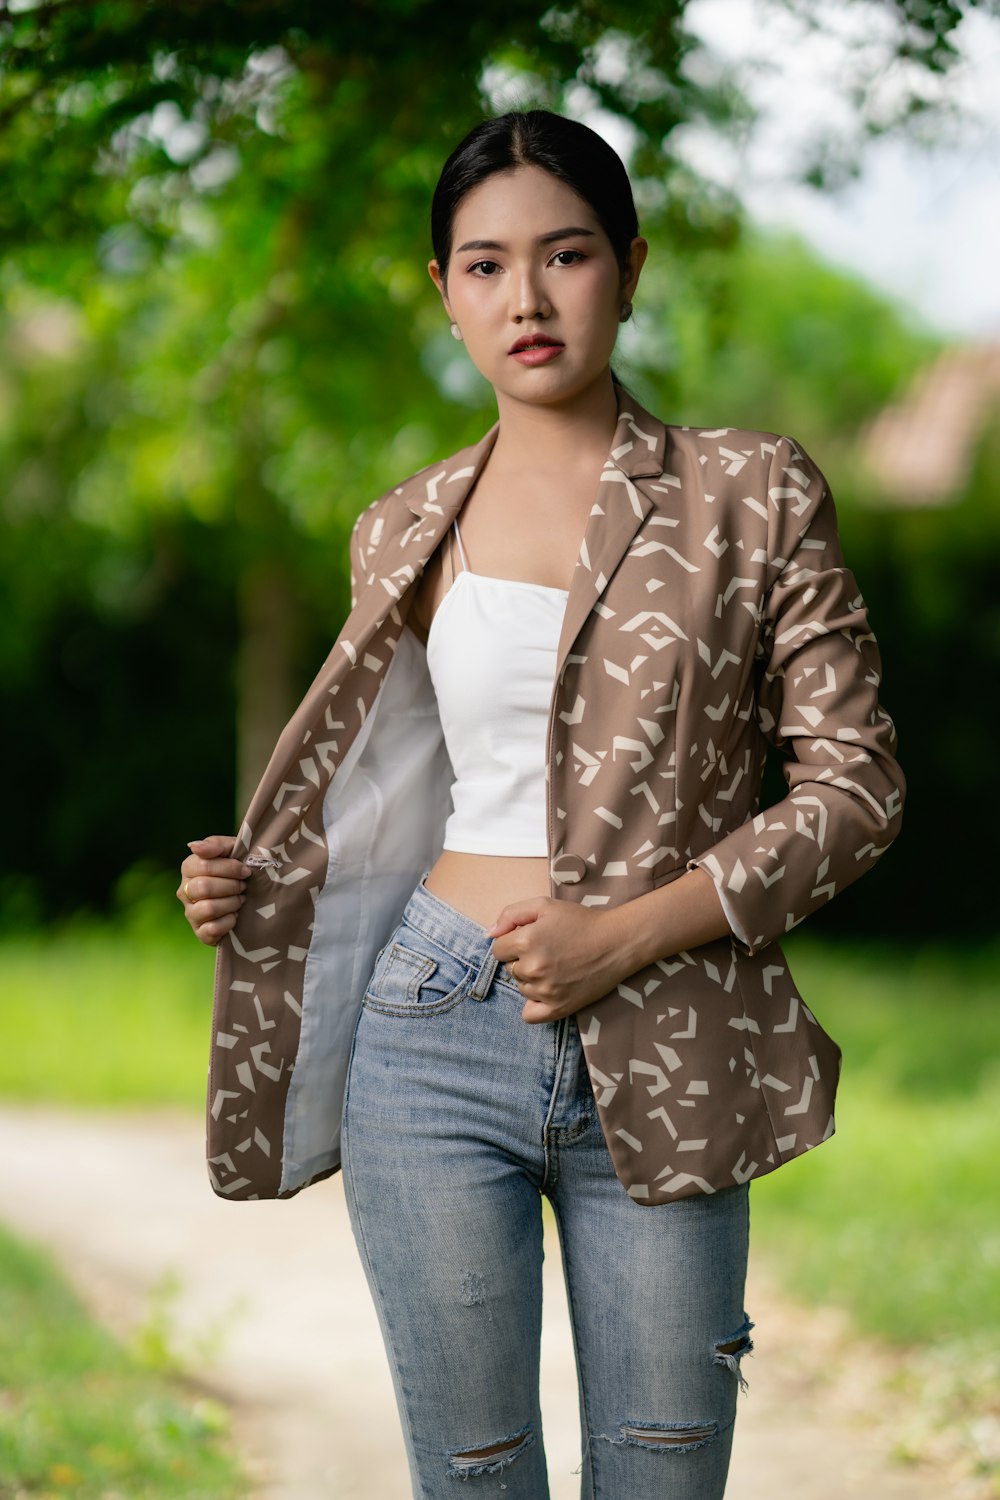 woman wearing white top, brown blazer, ansd gray denim jeans standing near green field